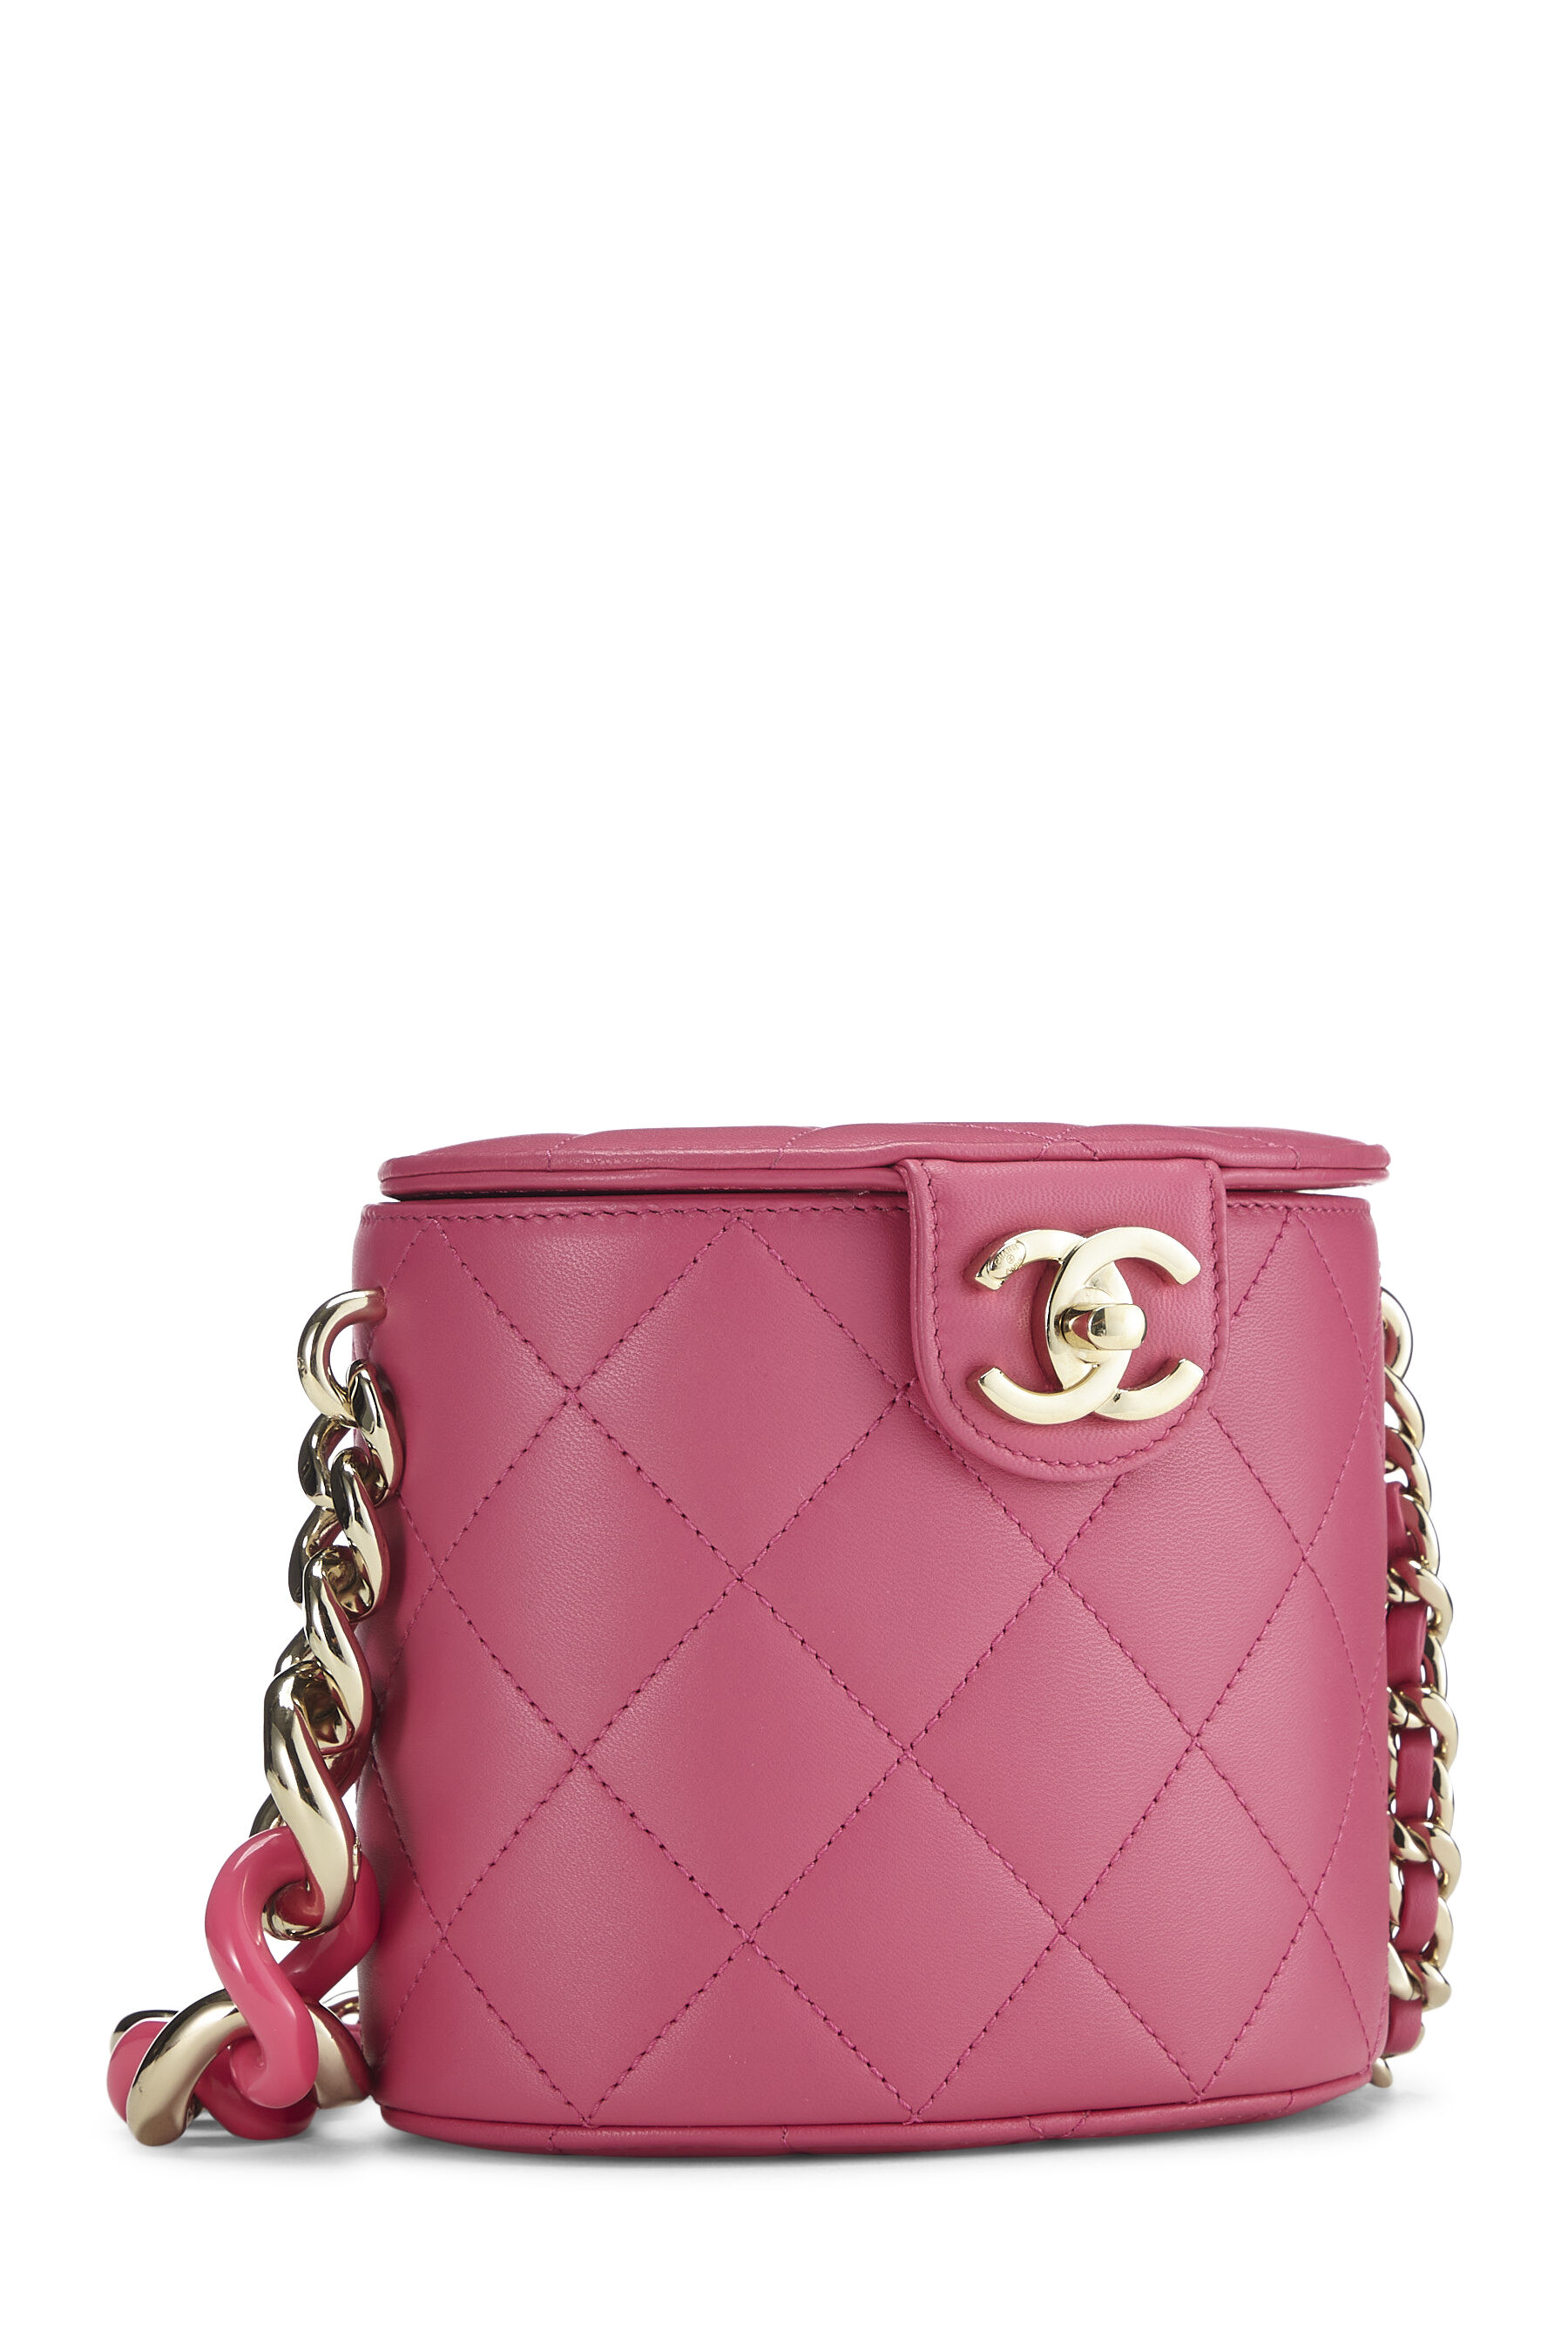 Chanel - Pink Lambskin 'CC' Elegant Chain Vanity Case